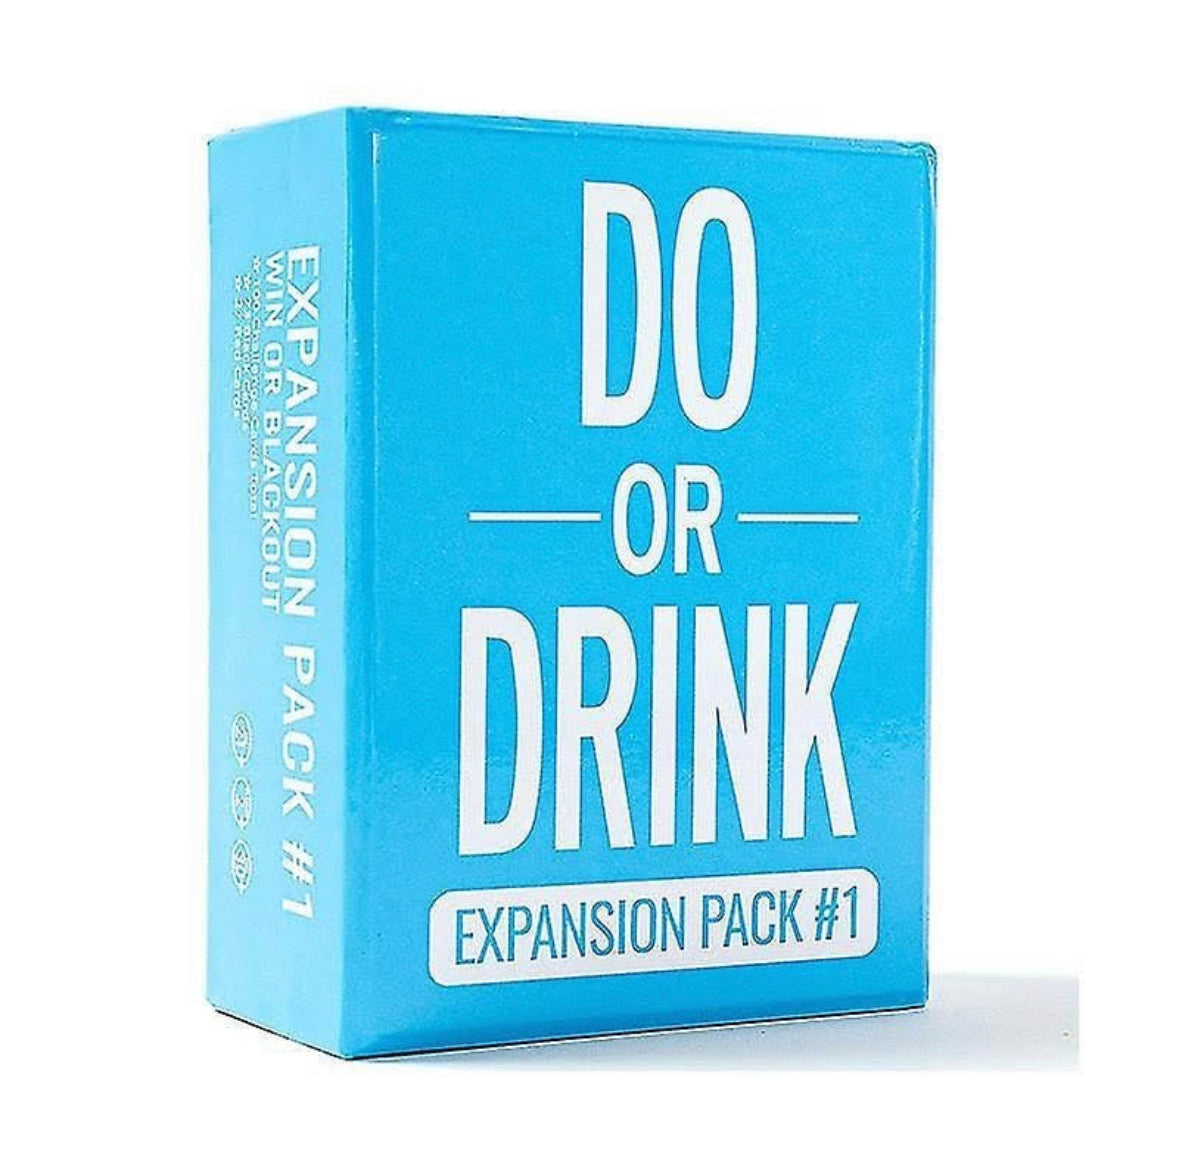 Do or drink - expansion pack 1